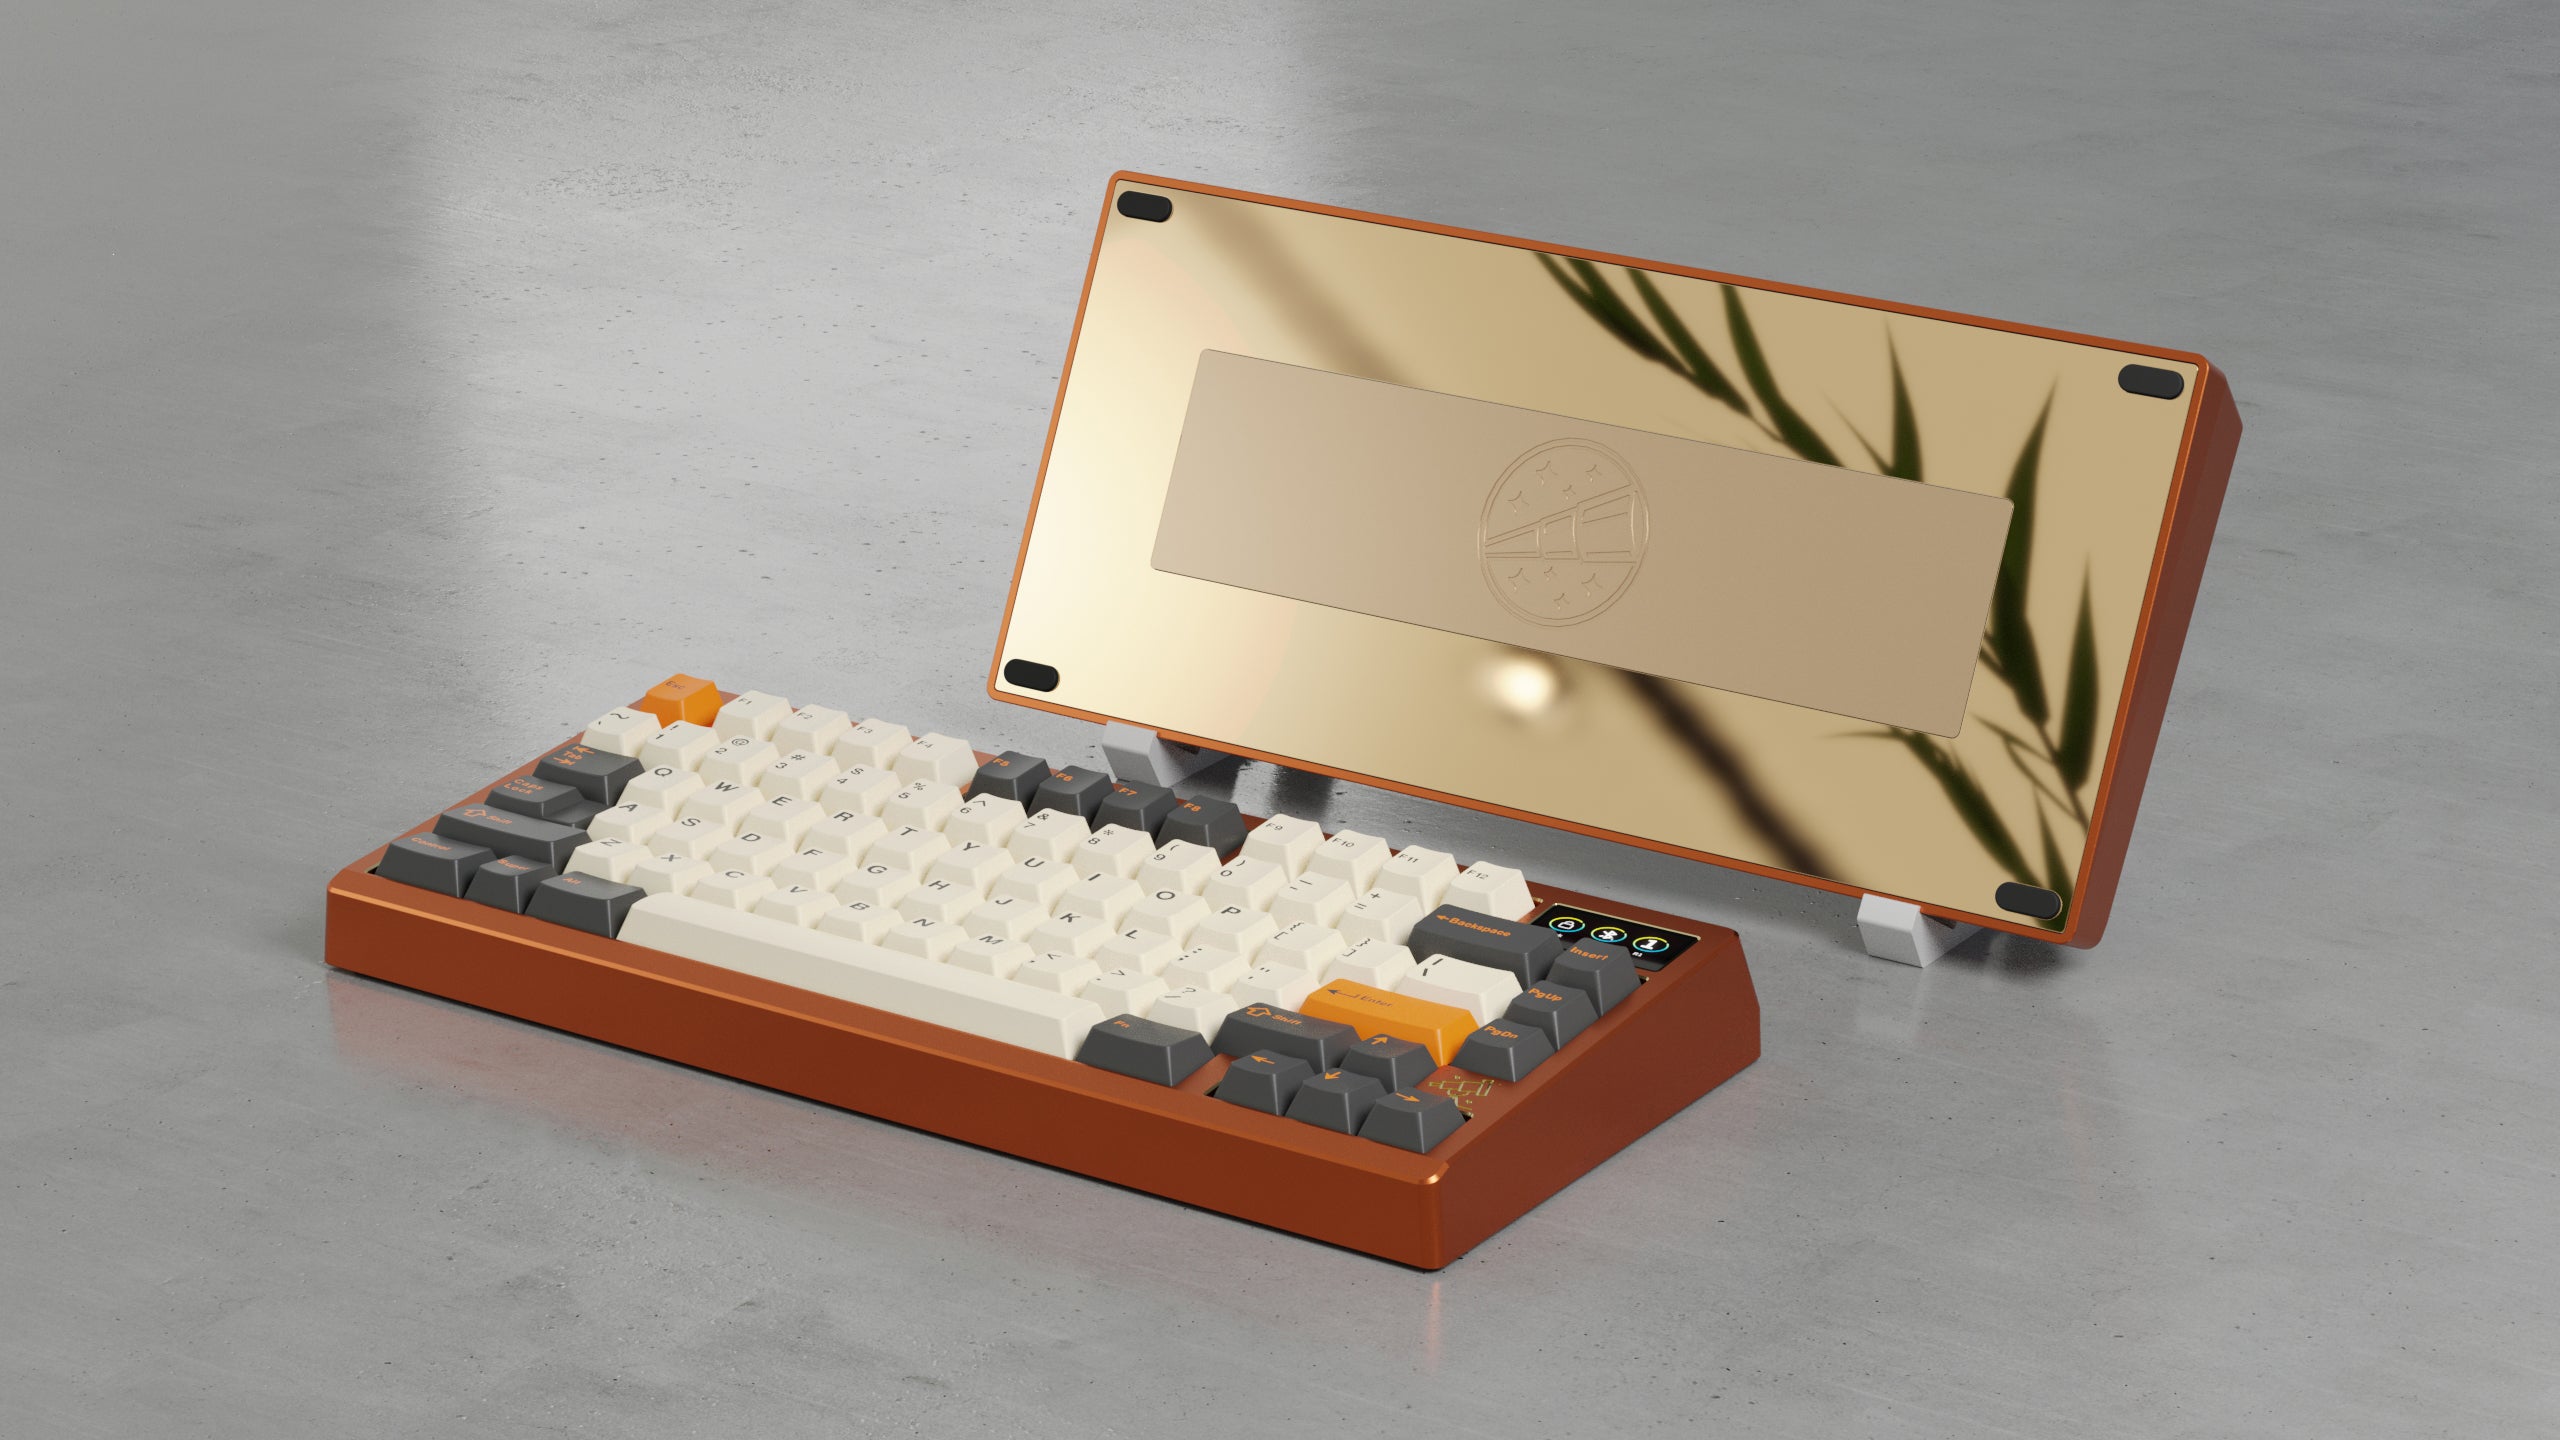 Zoom75 SE Keyboard - Anodized Orange [Preorder]